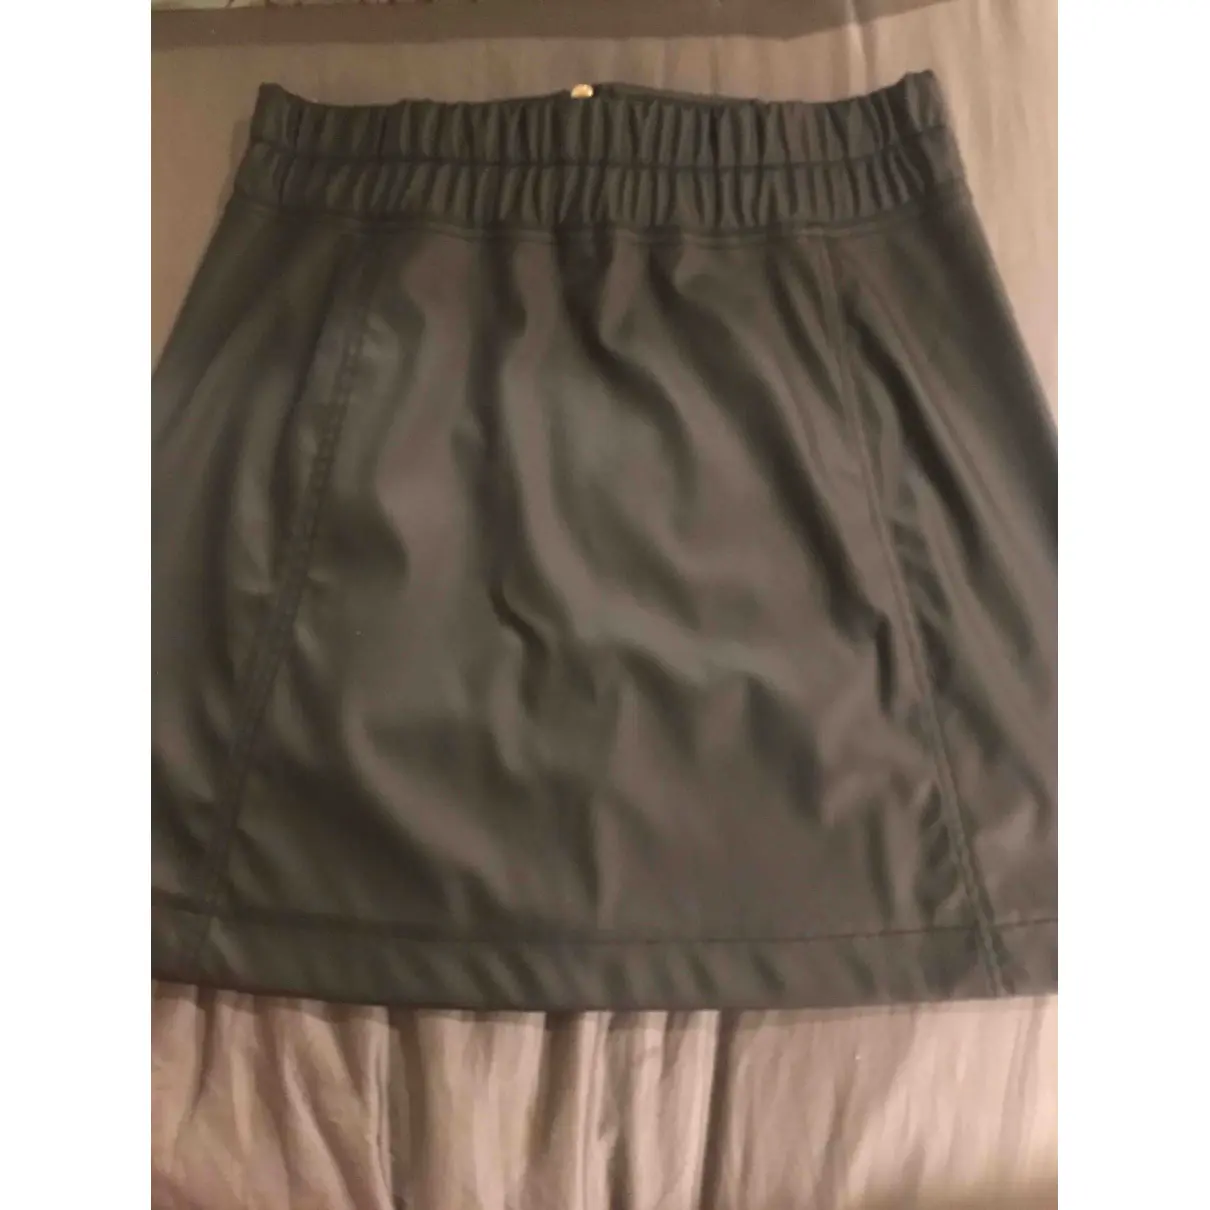 Buy Paco Rabanne Mini skirt online - Vintage